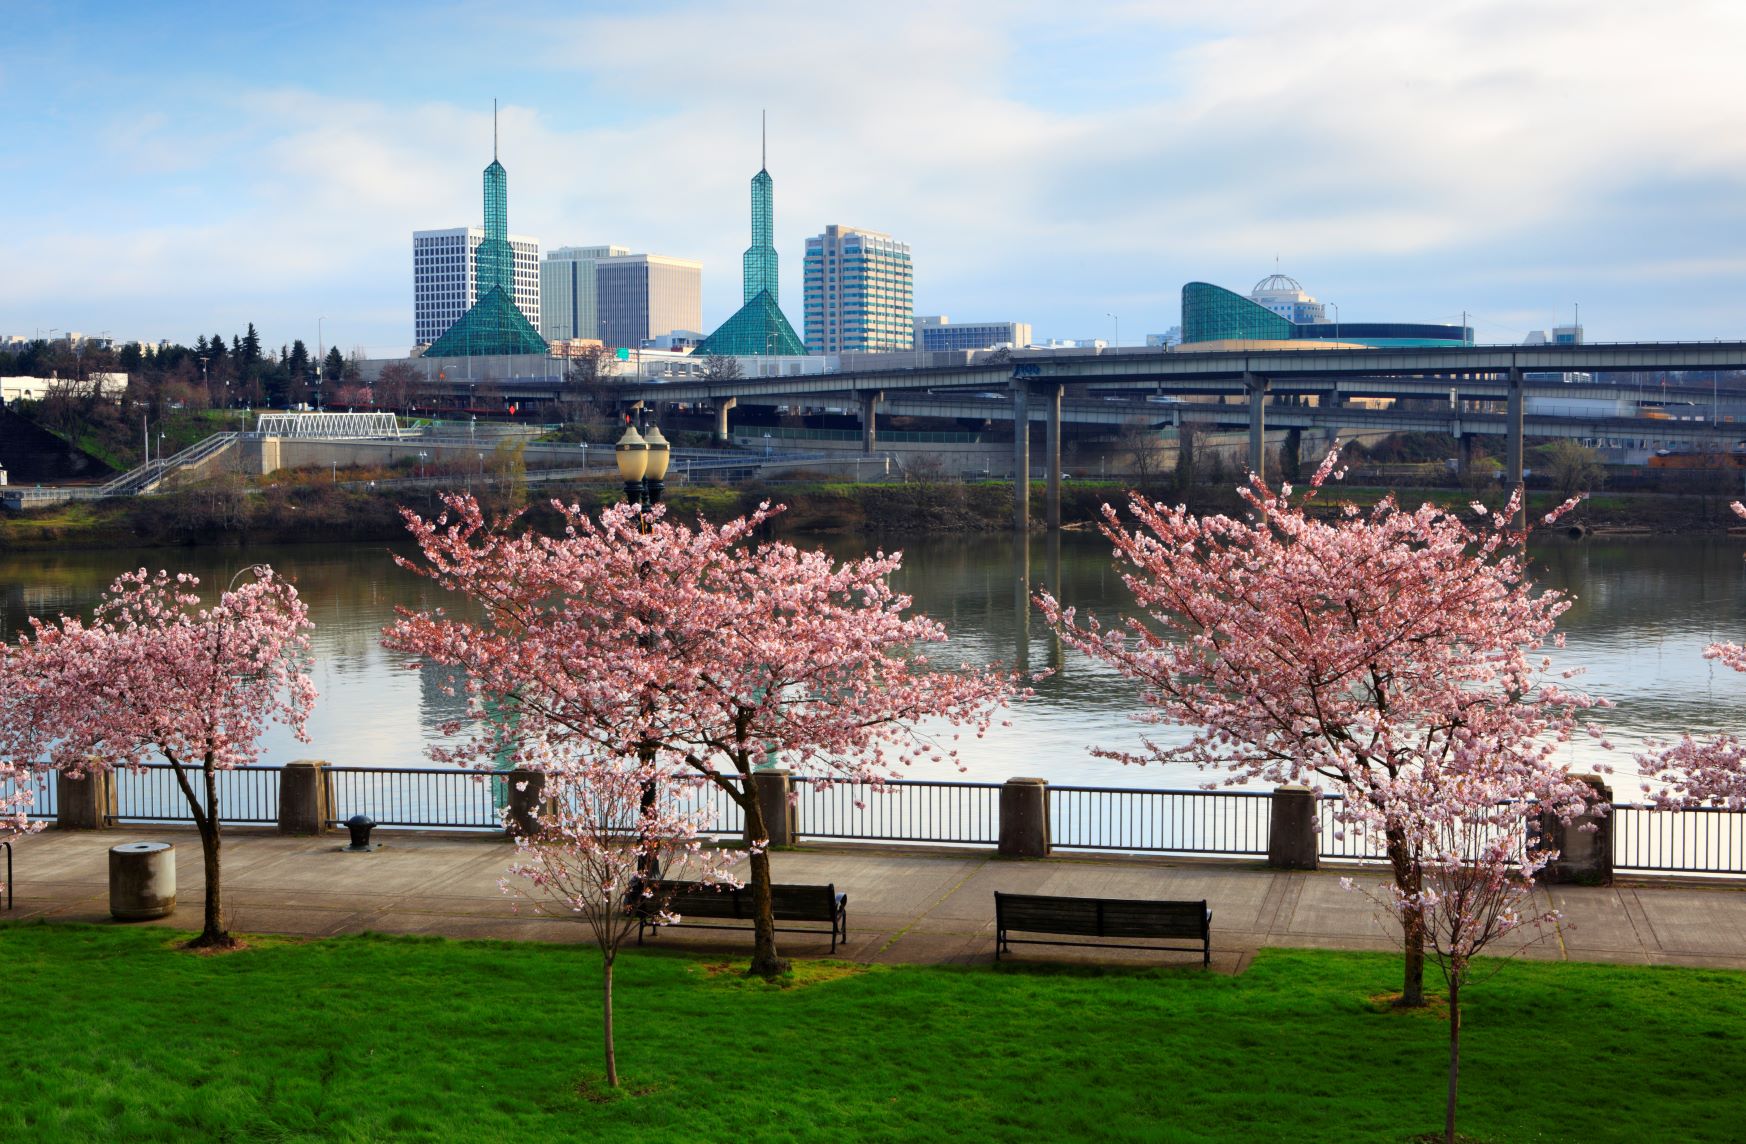 Portland Oregon's waterfront park during the cherry blossom season.